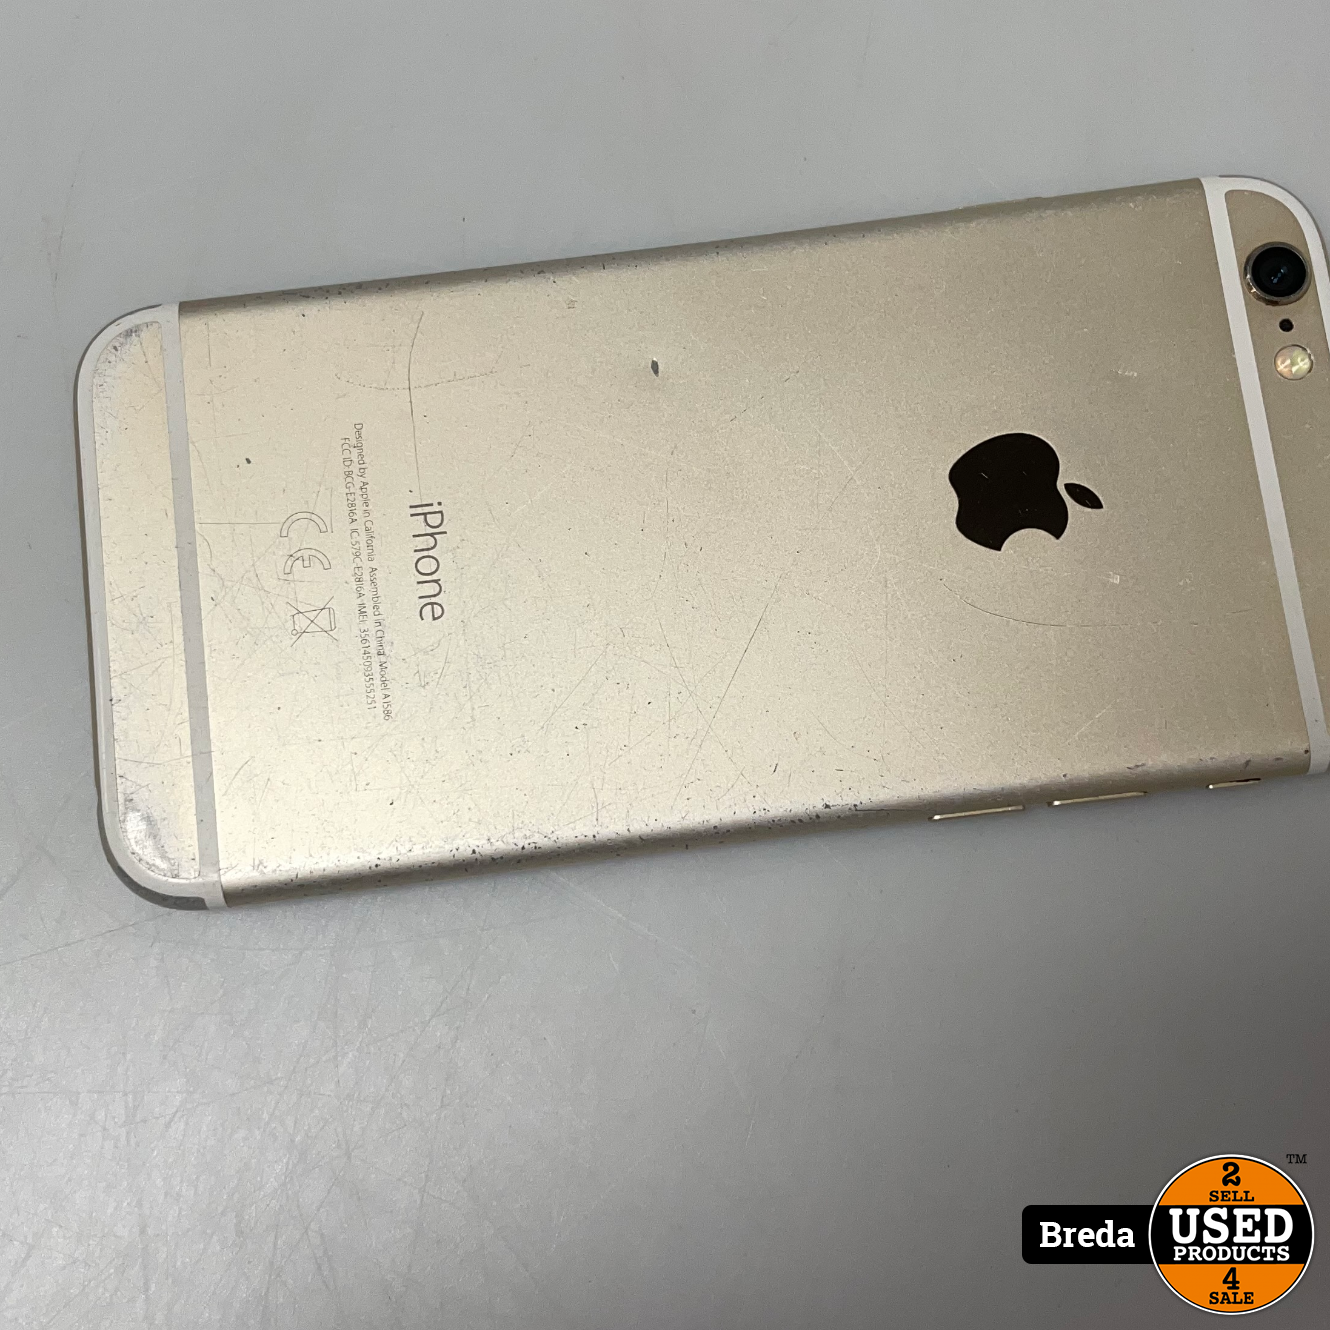 Bek Nauwgezet Phalanx iPhone 6 32GB Goud | Touch-ID stuk | Cameras stuk | Met garantie - Used  Products Breda